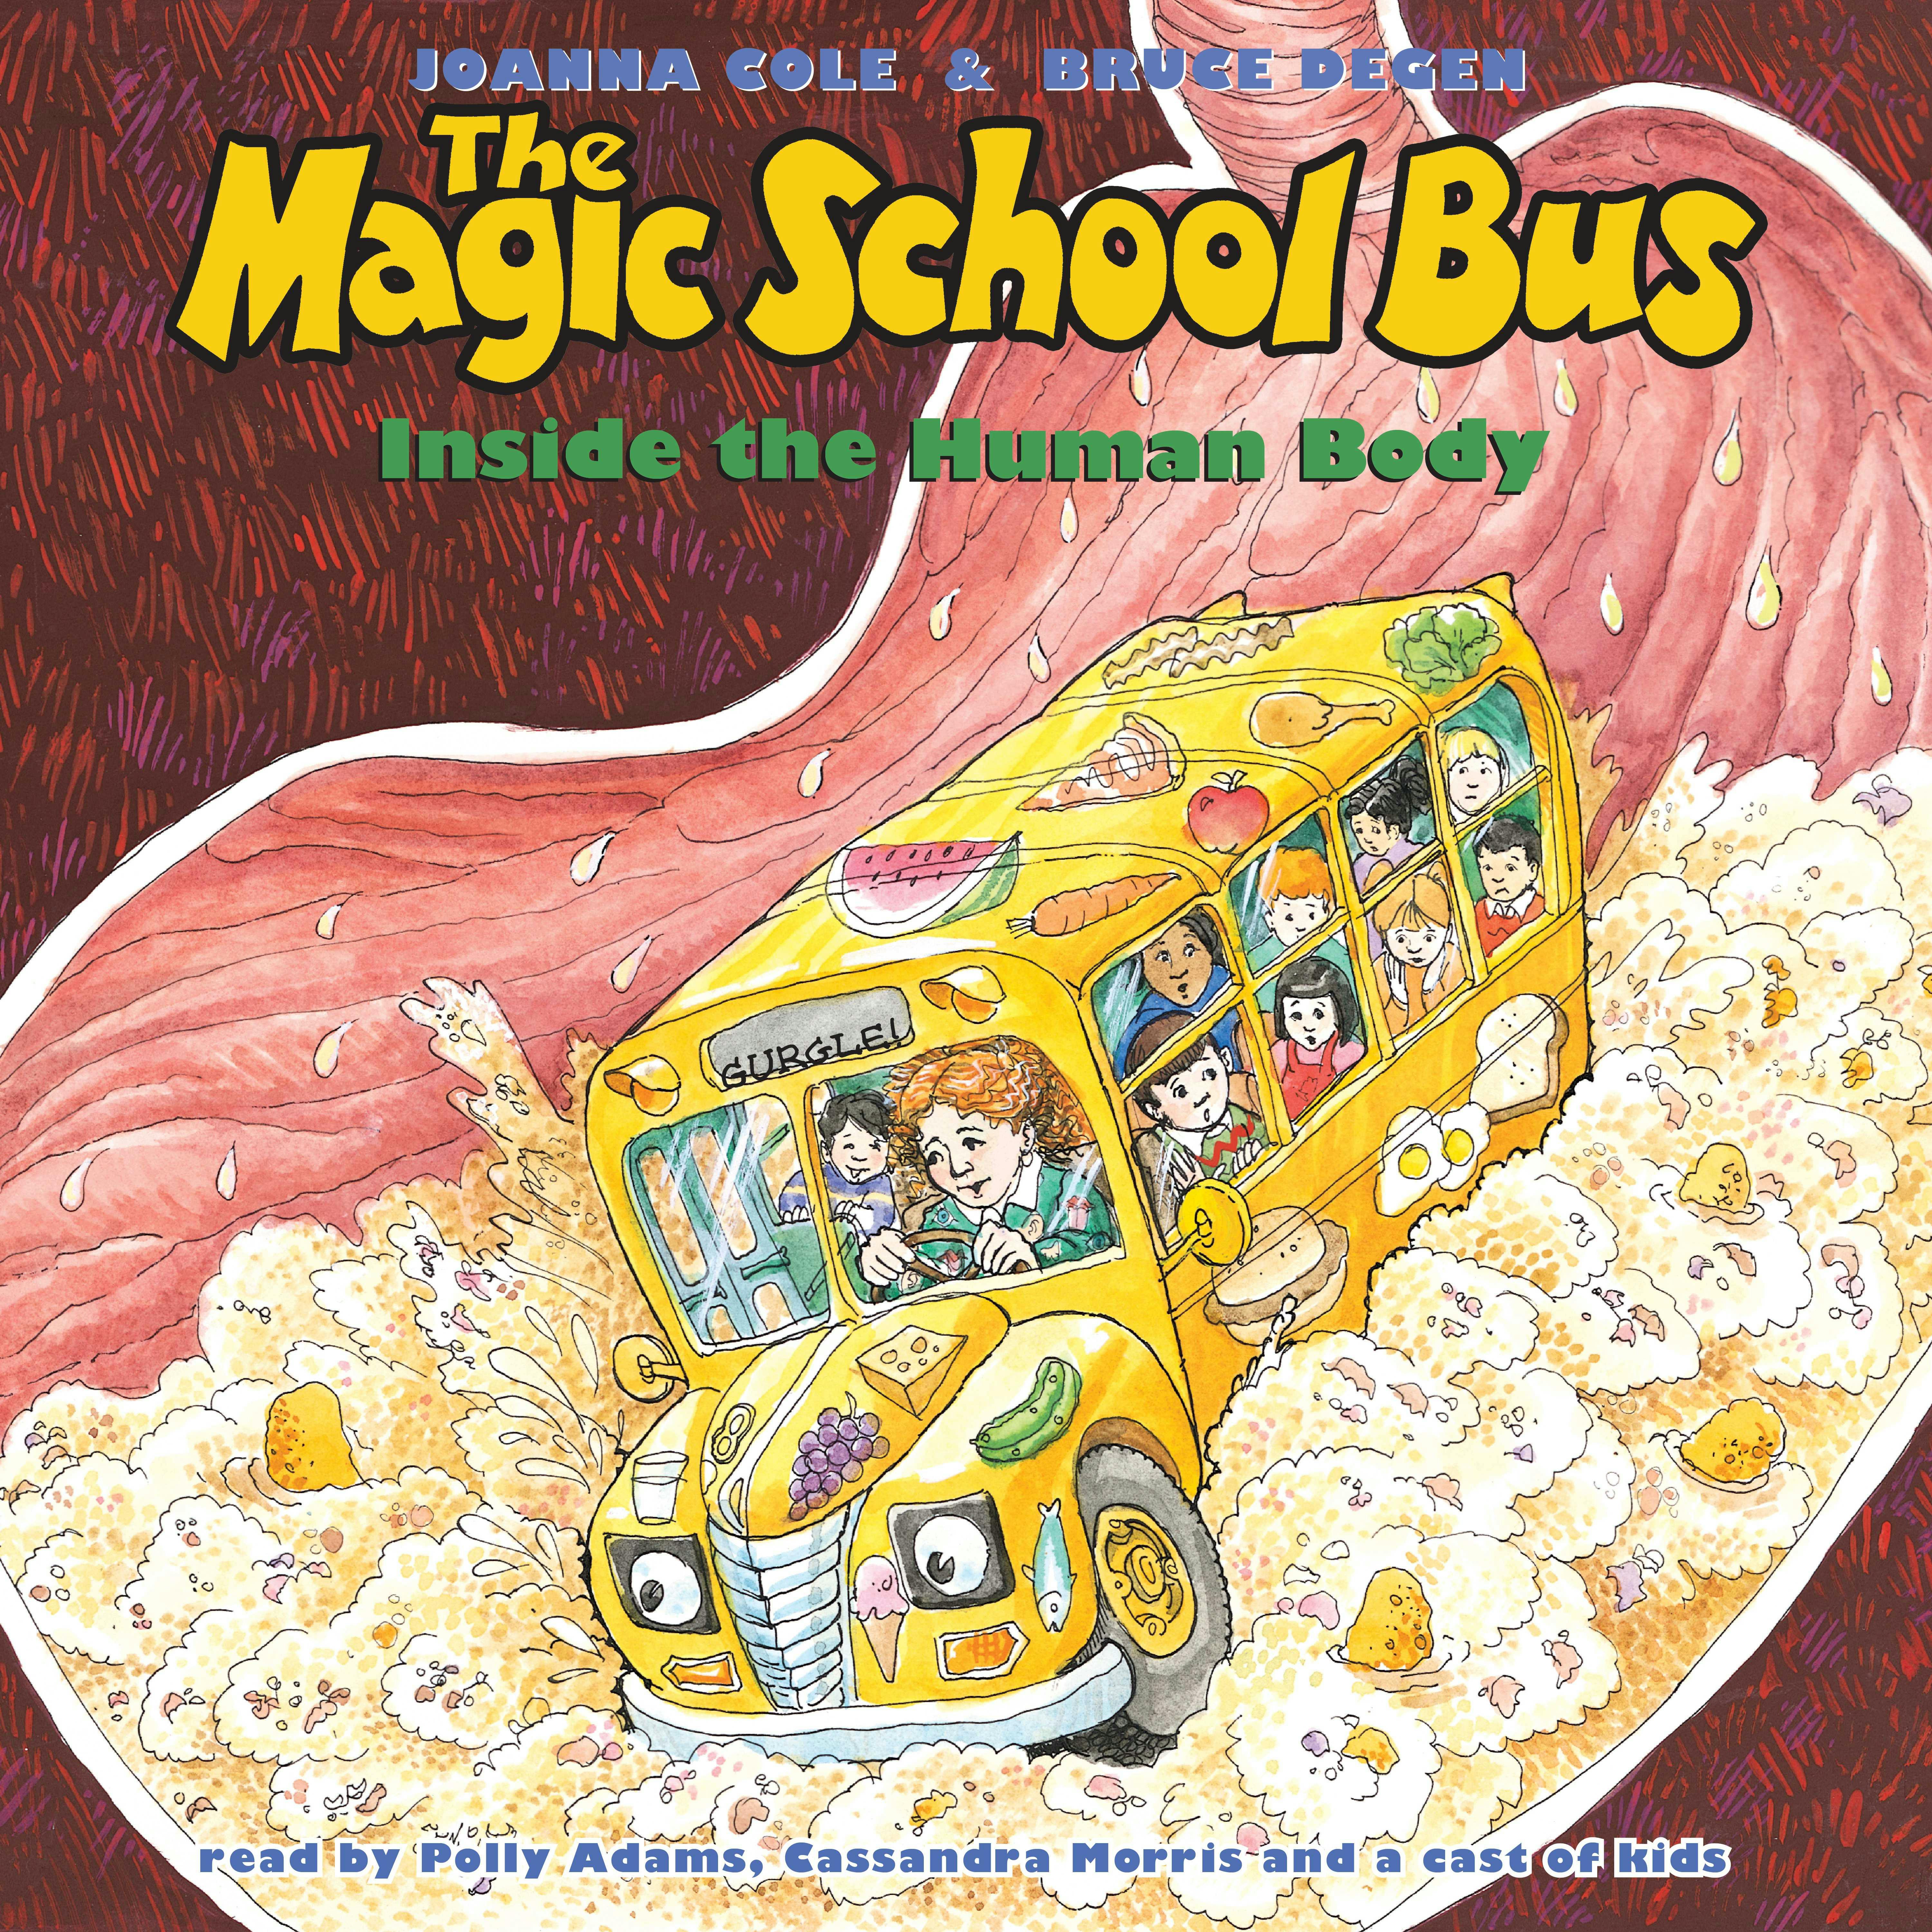 The Magic School Bus Inside the Human Body - Bruce Degen, Joanna Cole